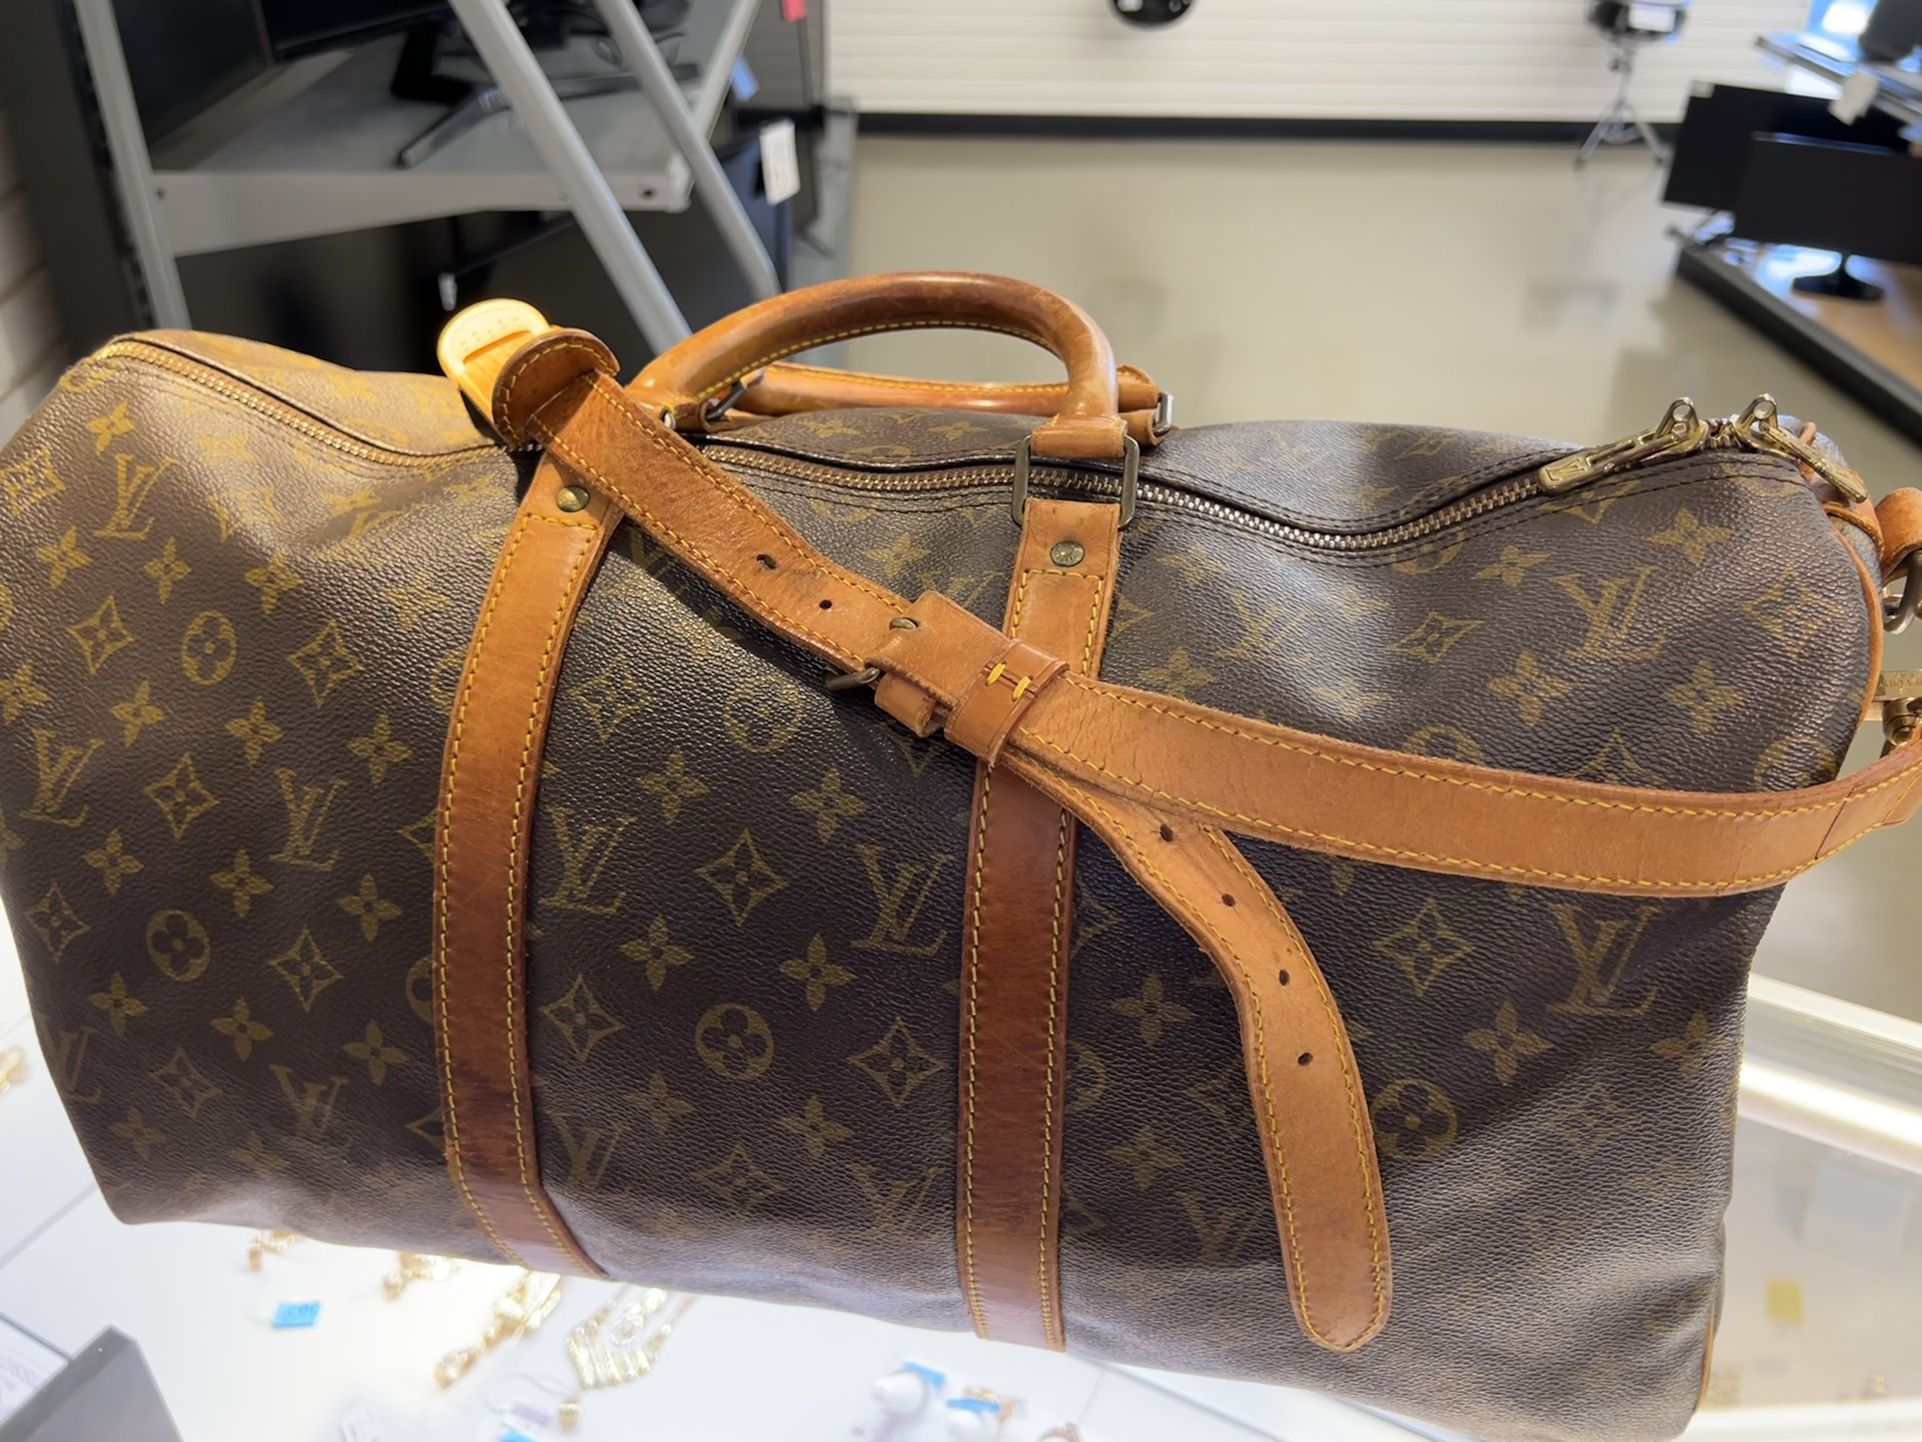 Louis Vuitton Handbags for sale in Houston, Texas